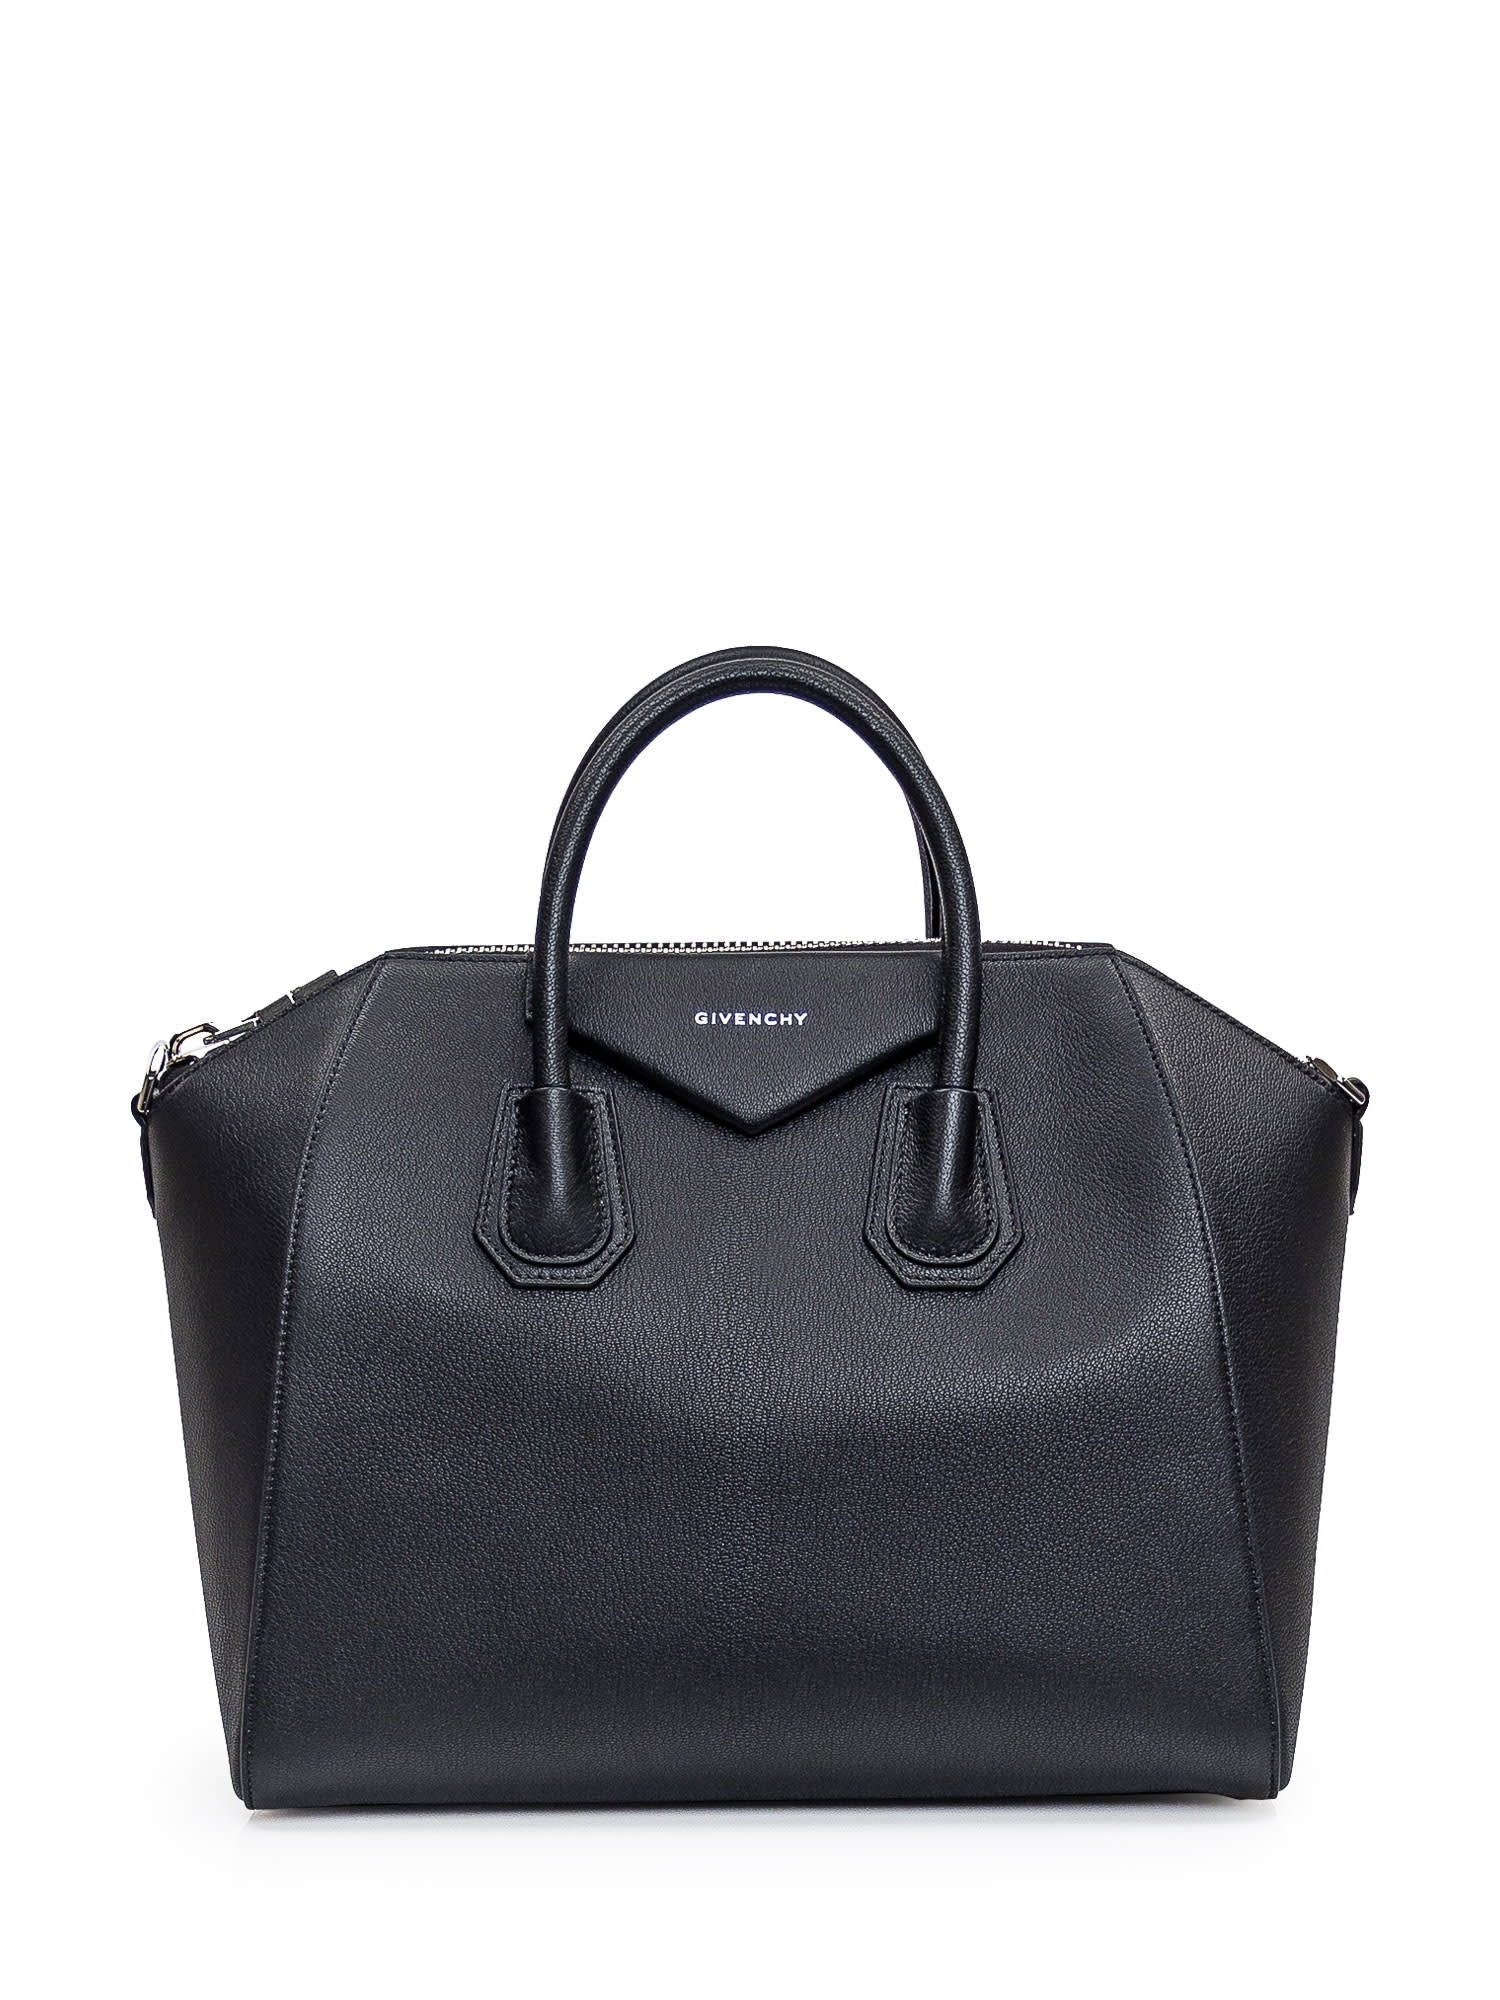 Givenchy Antigona Medium Bag In Black